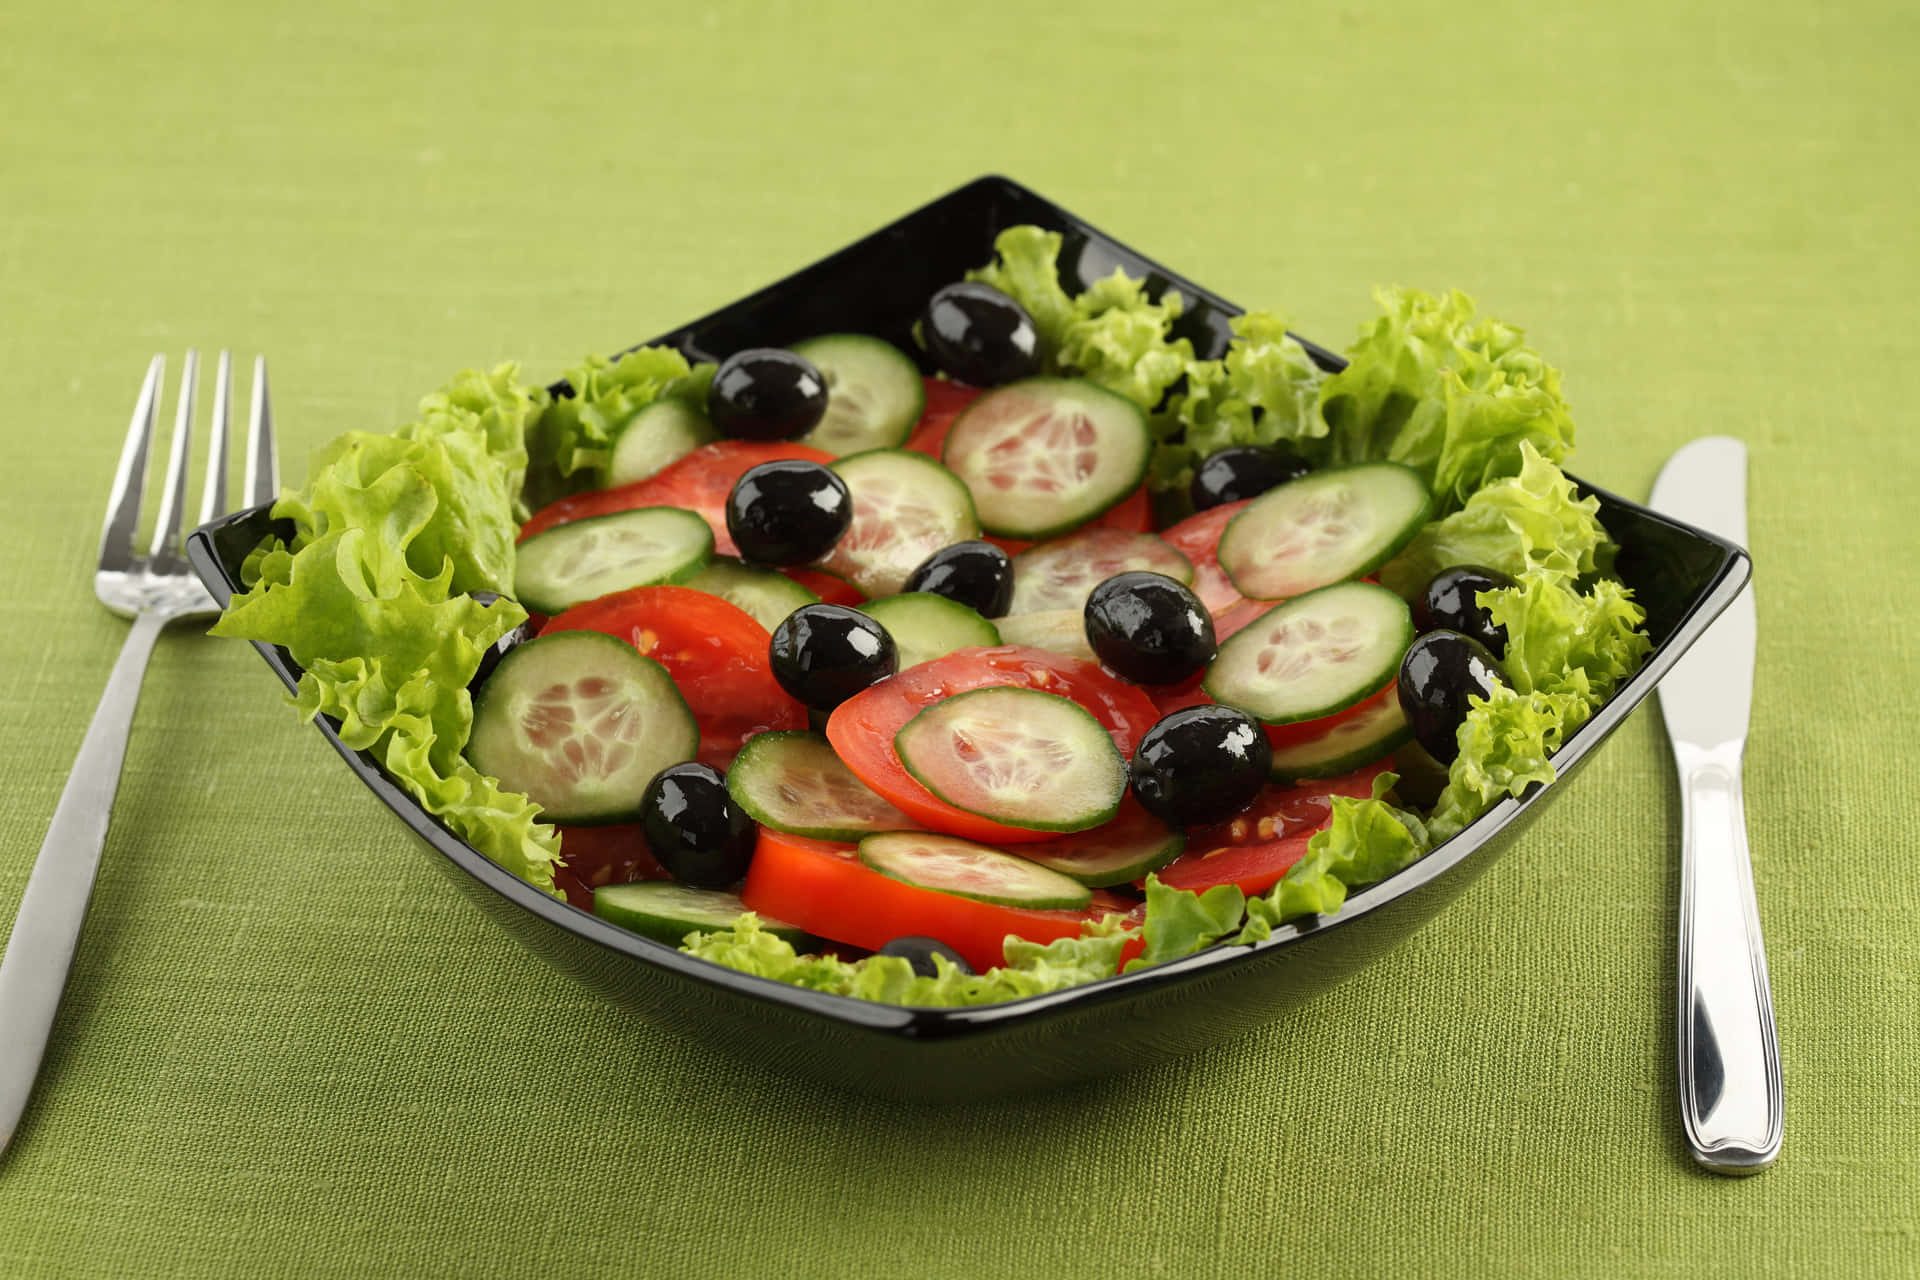 Fresh and Healthy Garden Salad